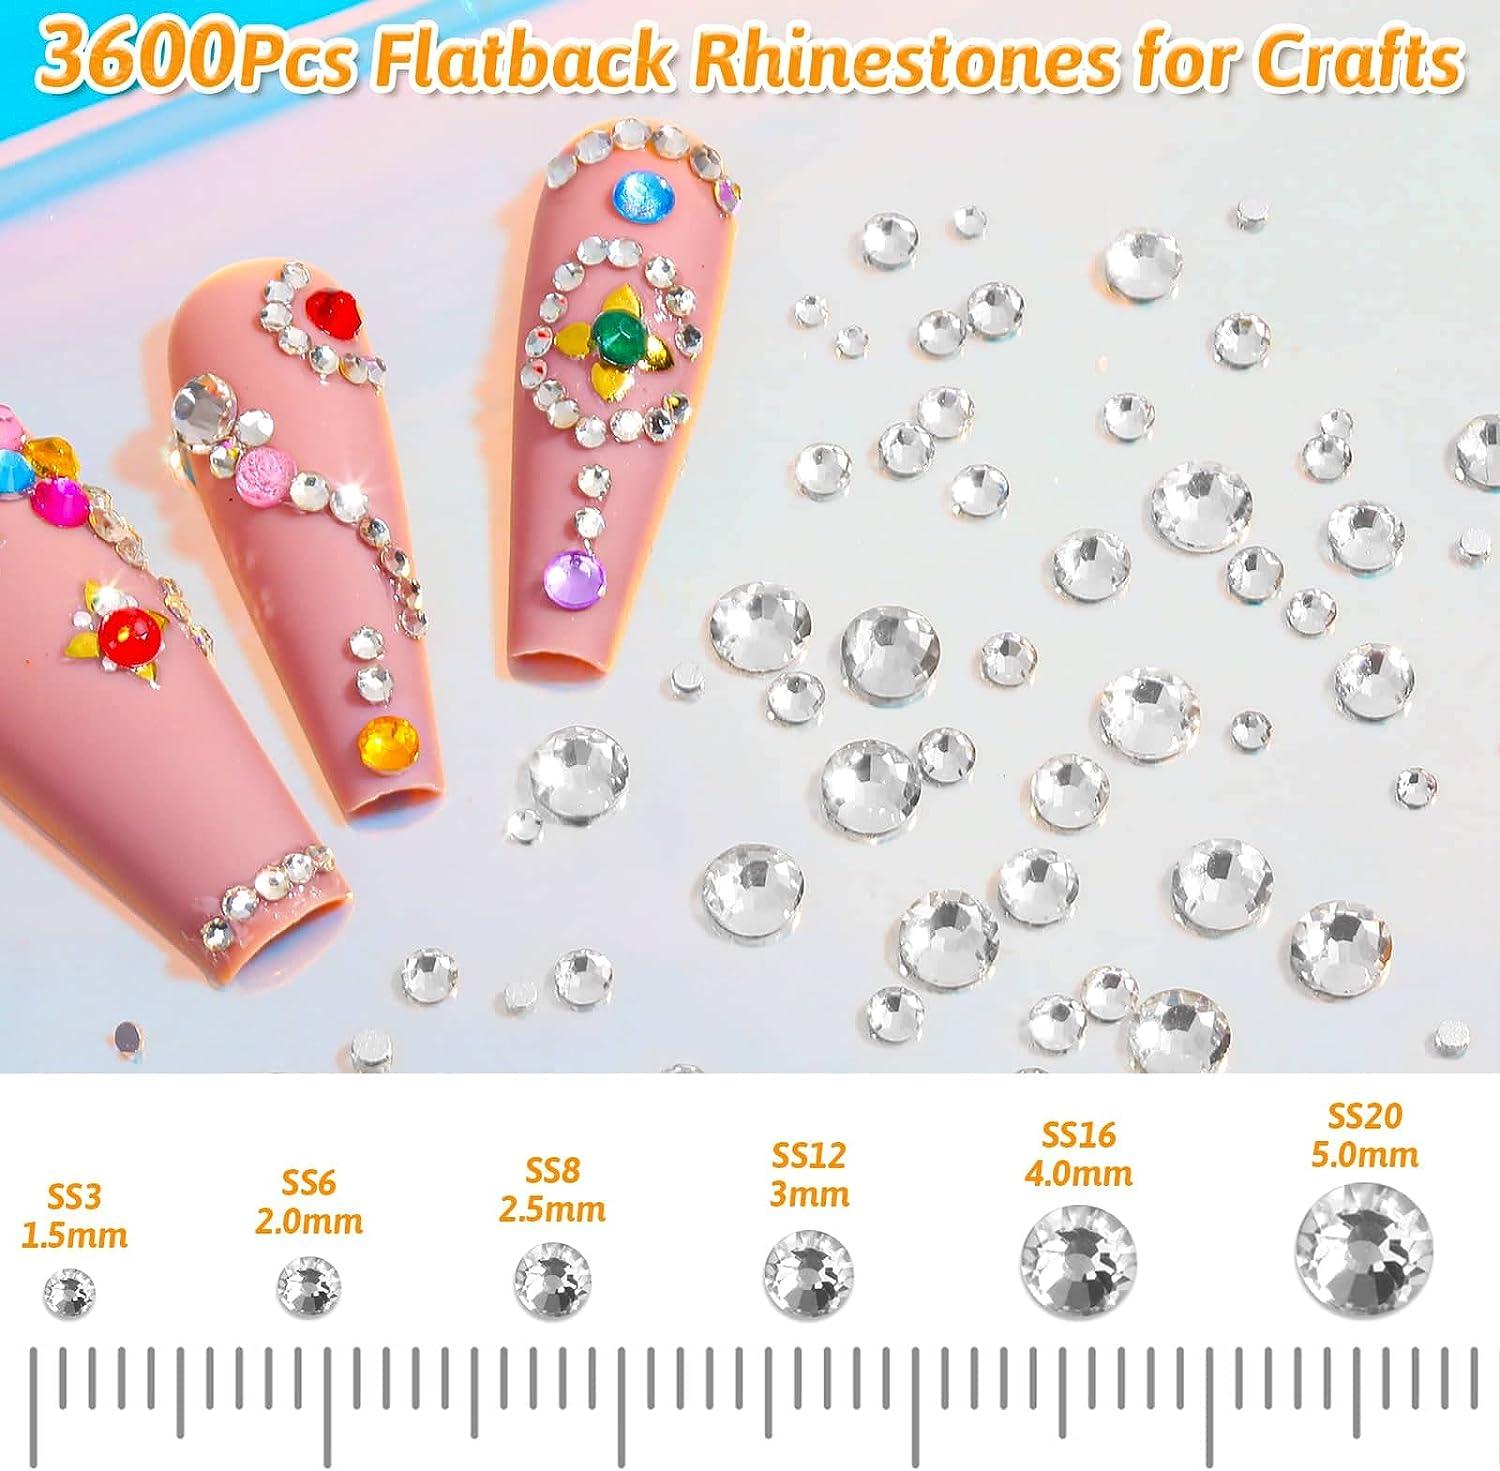 2mm Rhinestones – Jess' Crafting Co